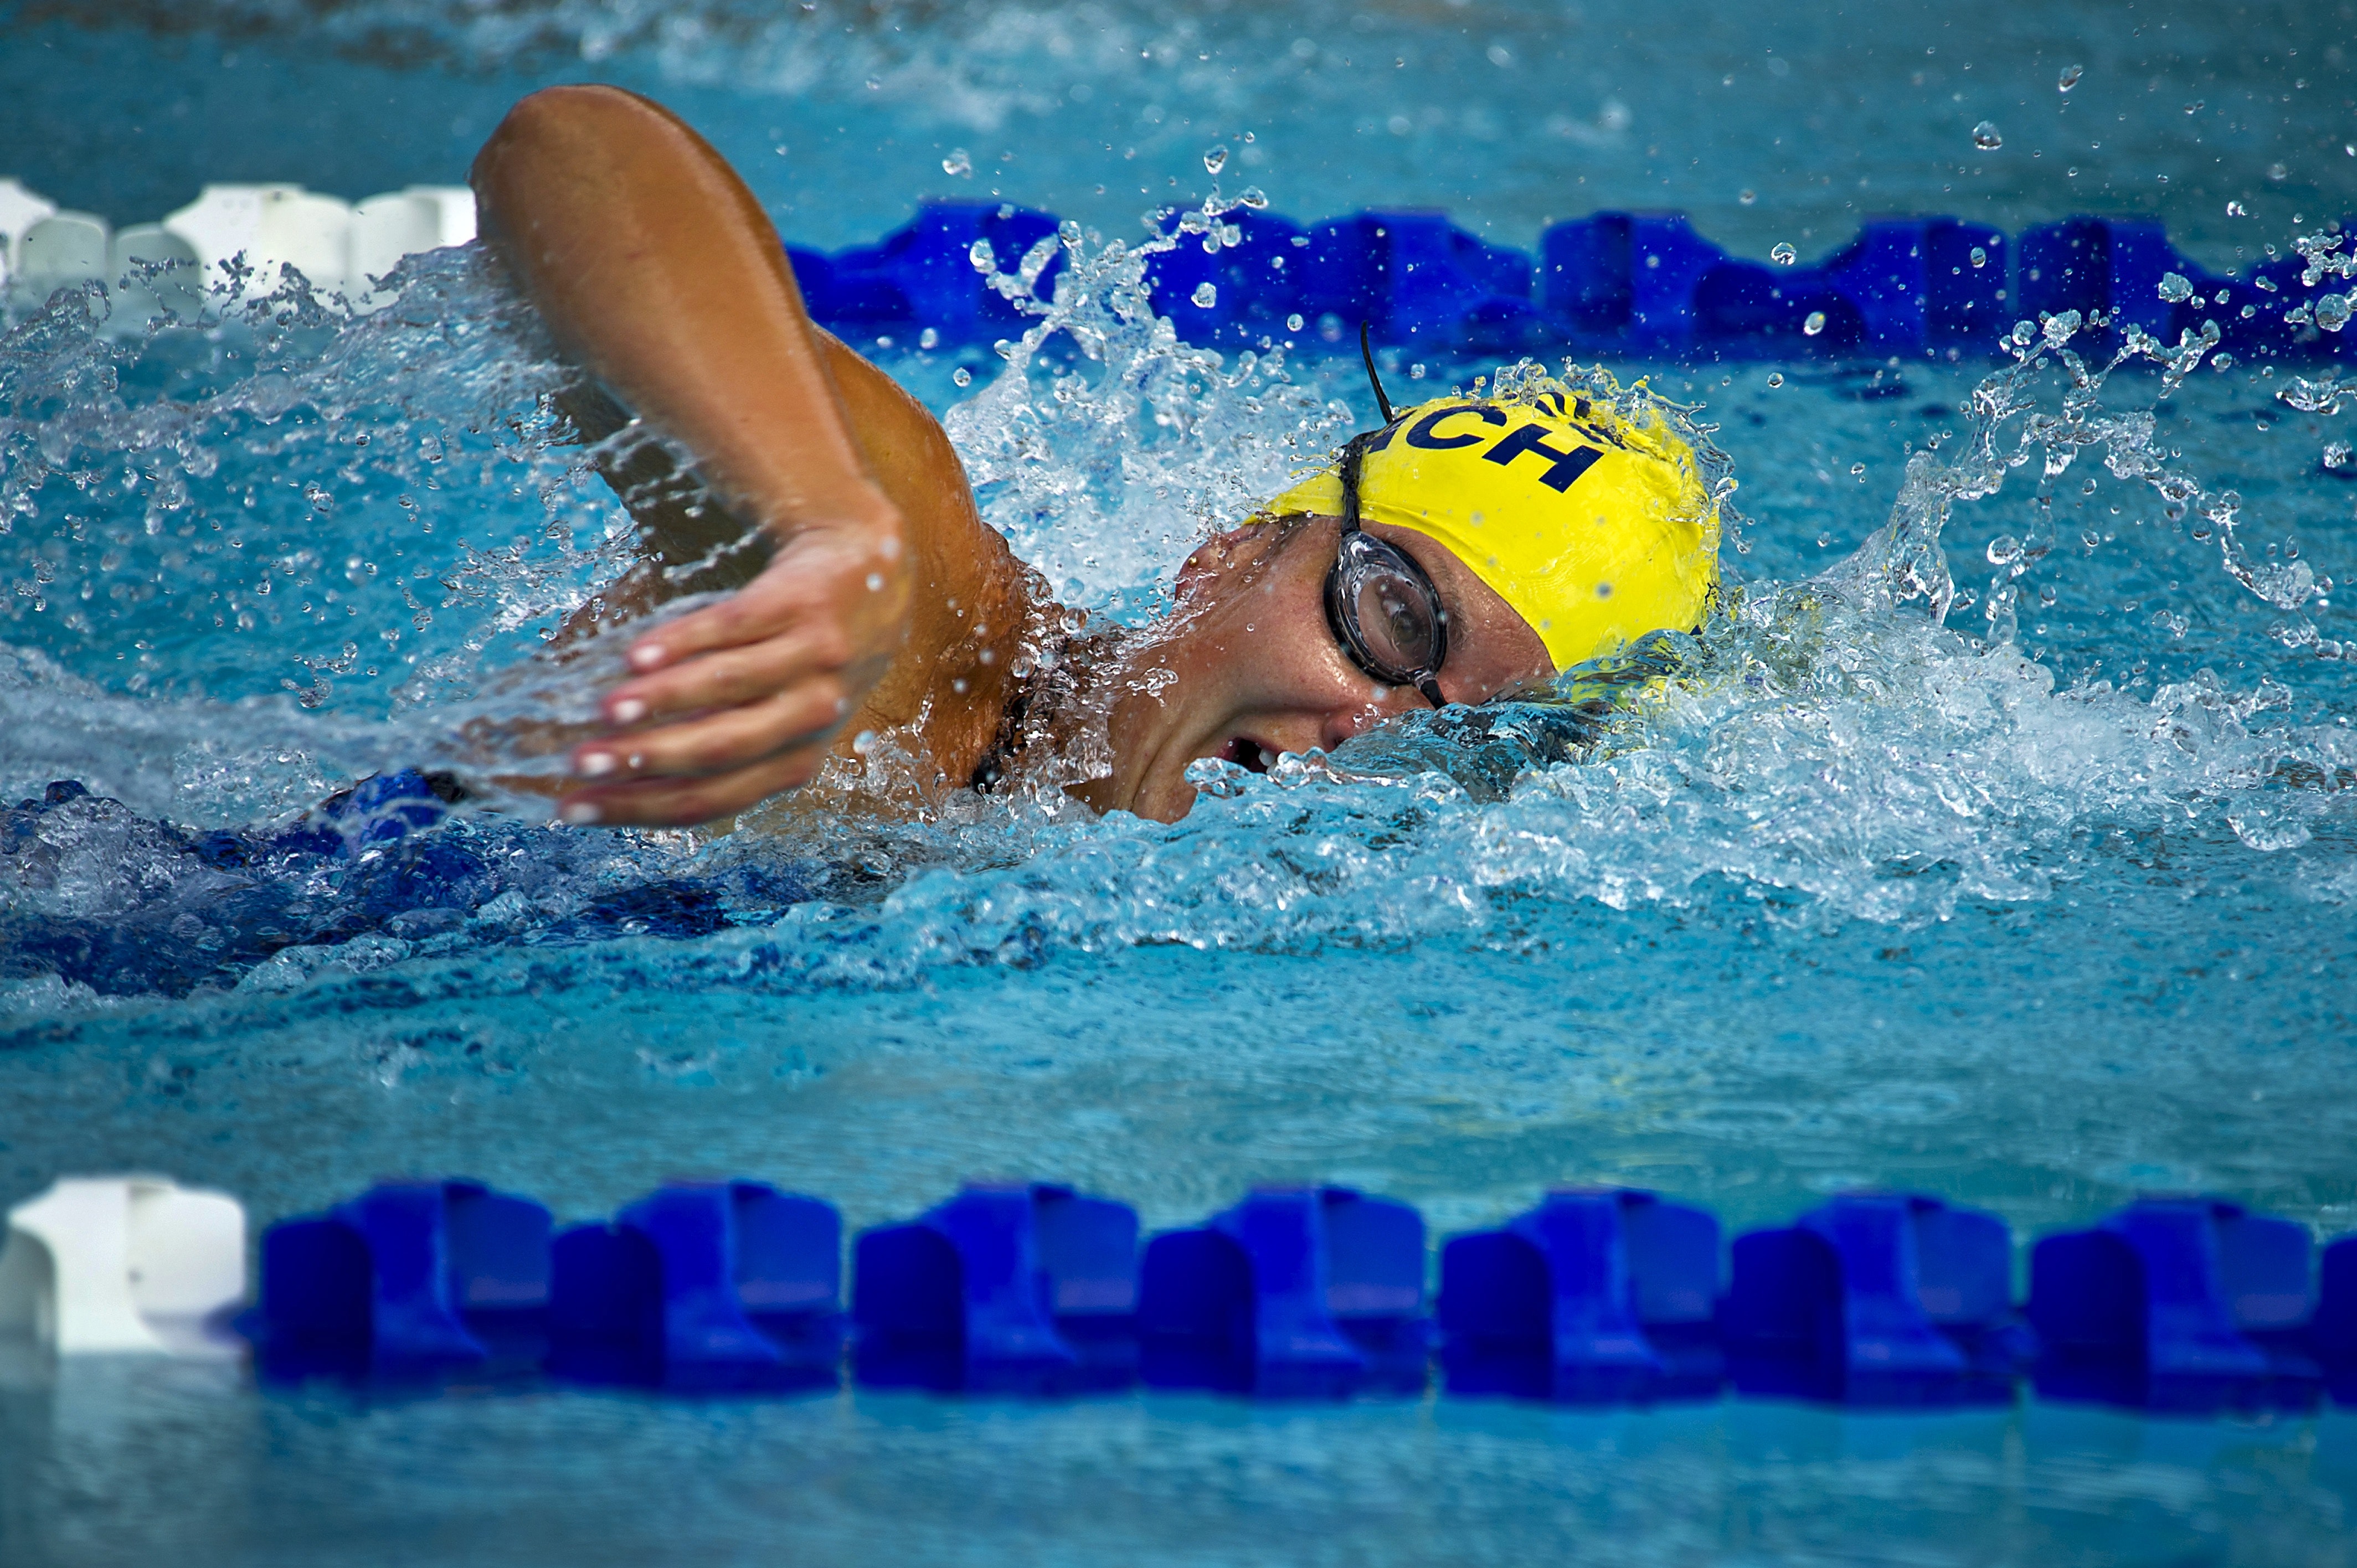 Person wearing yellow swimming cap on swimming pool photo